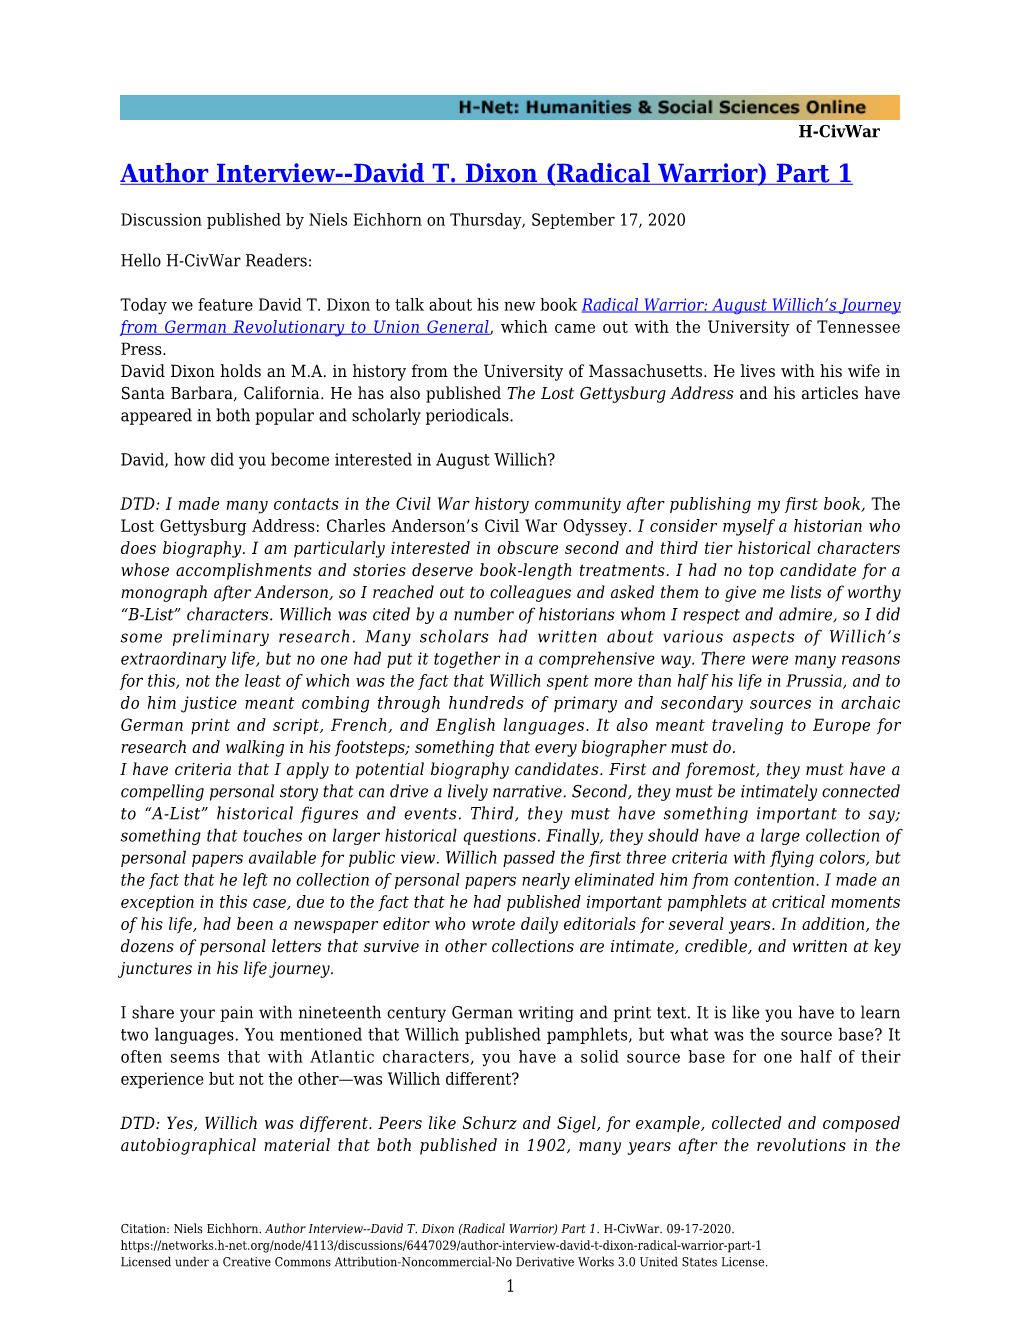 Author Interview--David T. Dixon (Radical Warrior) Part 1